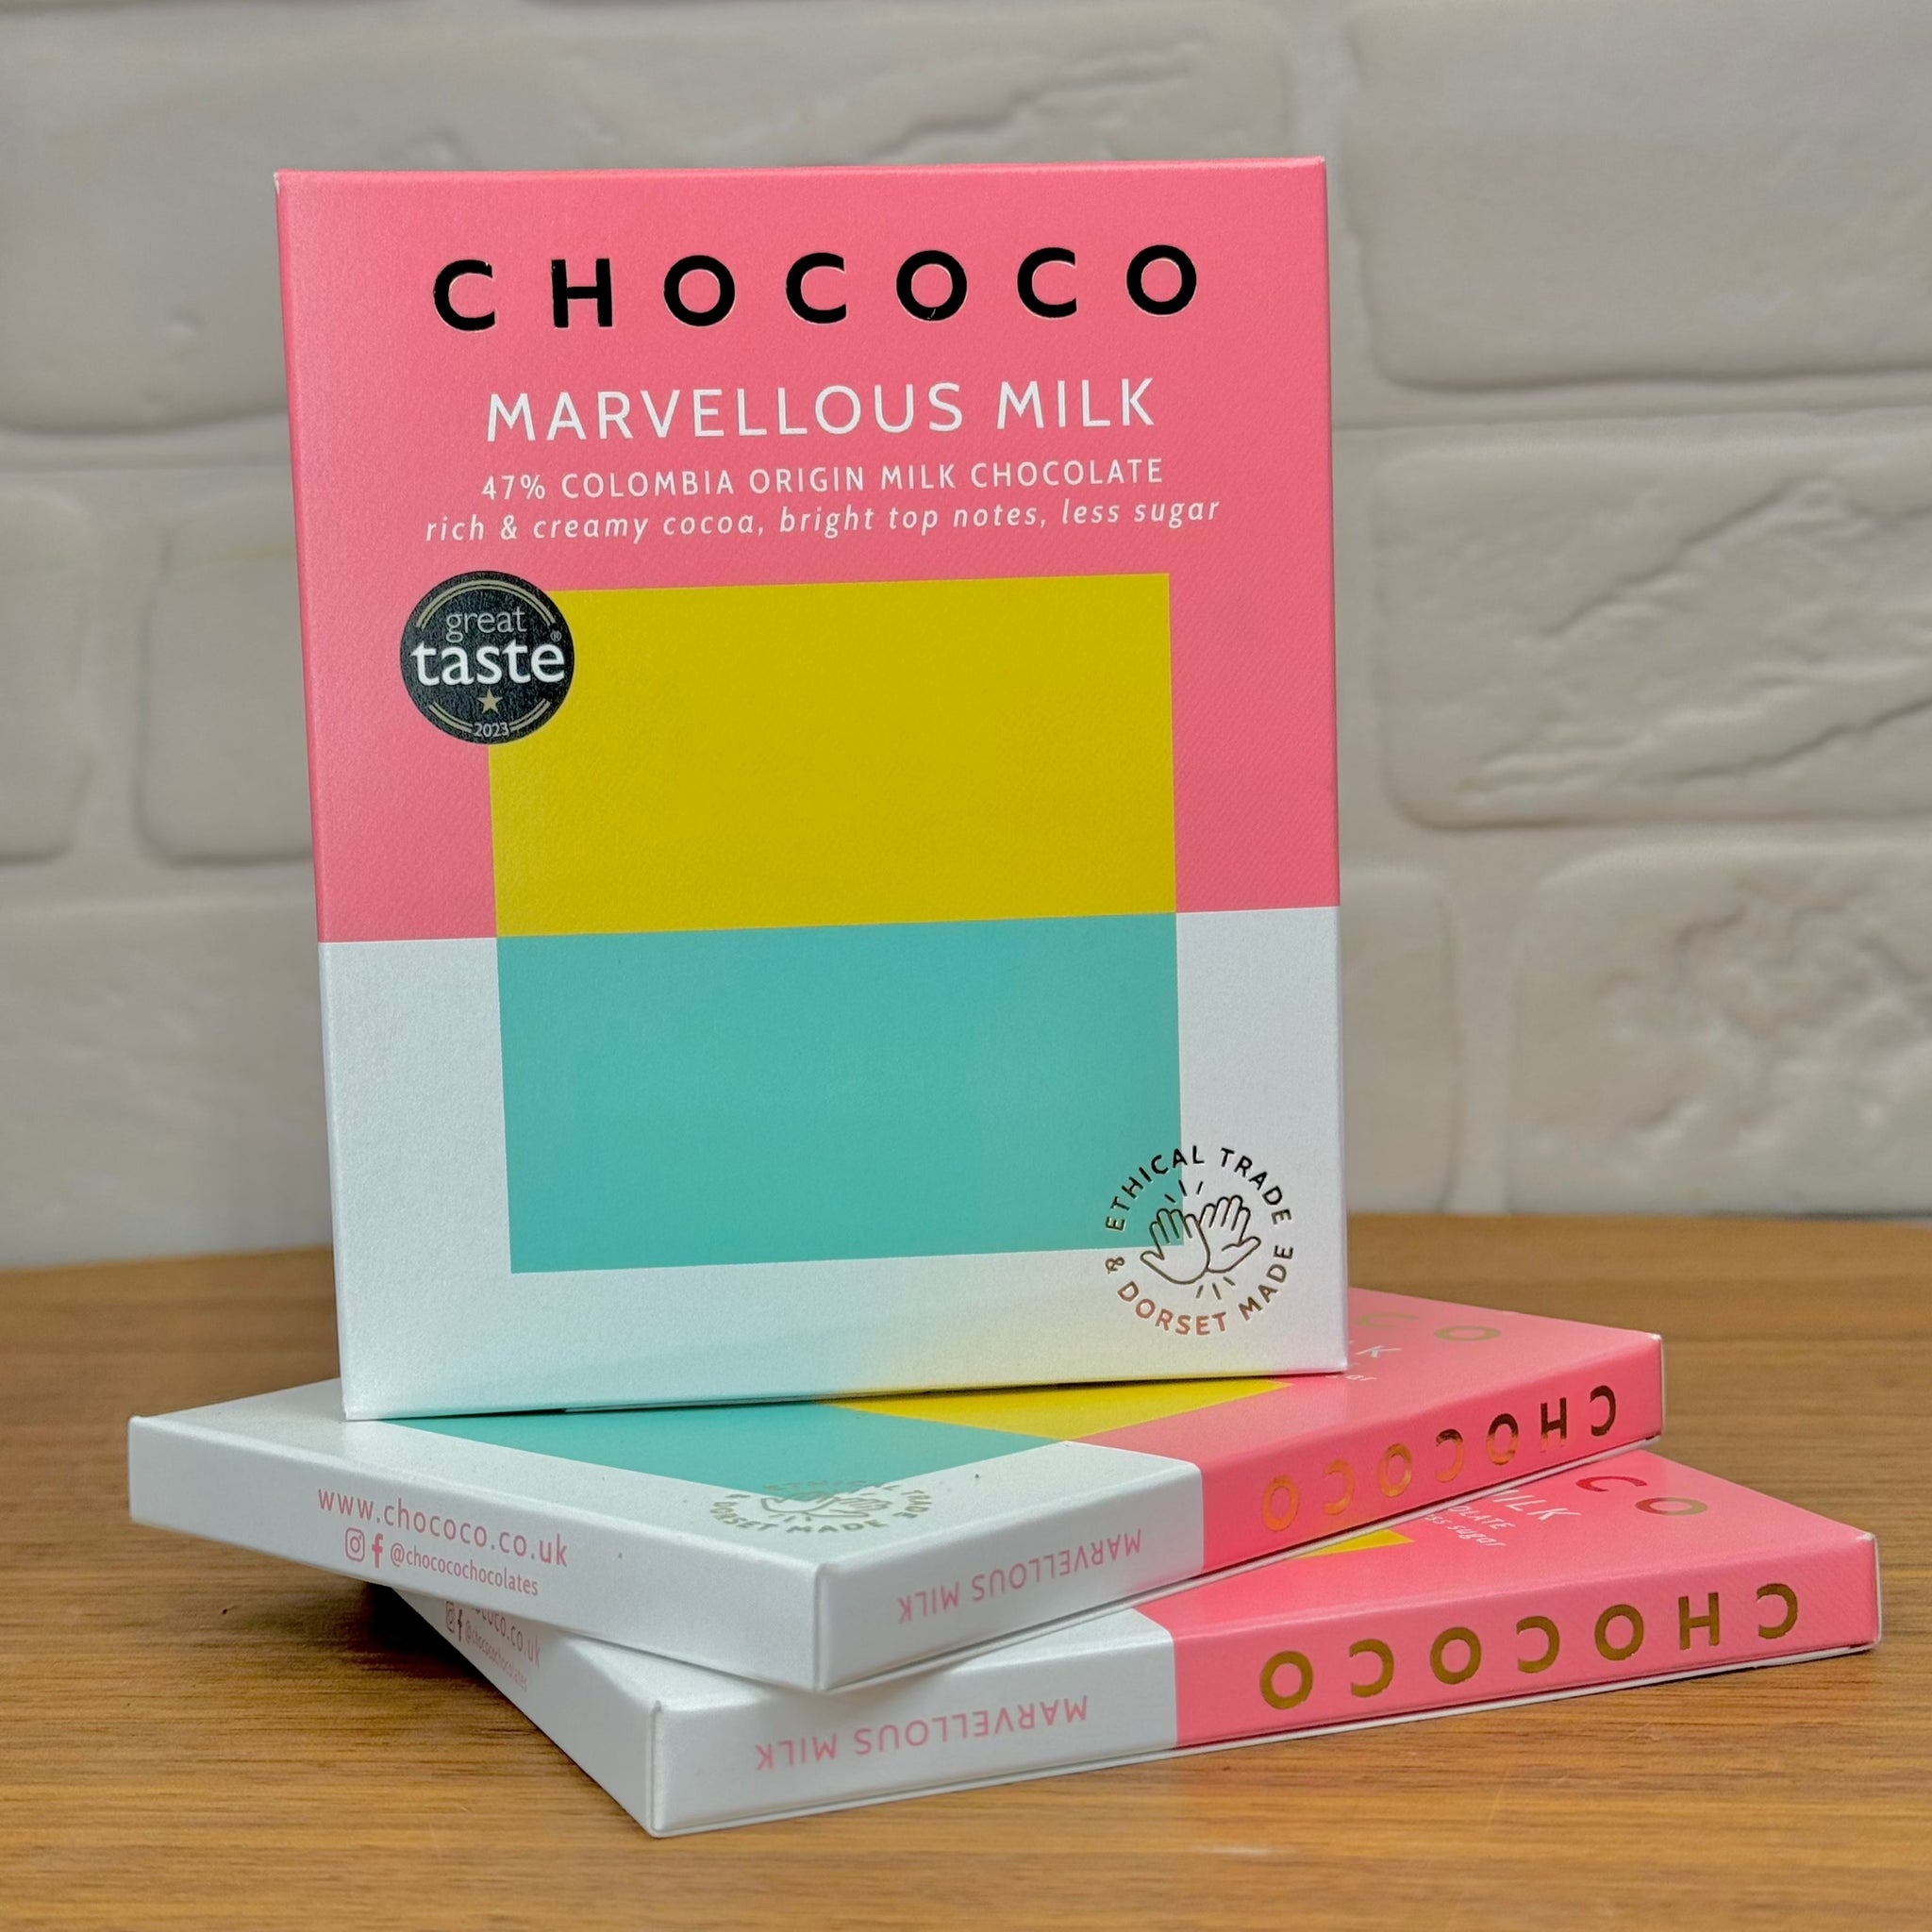 Chococo Marvellous Milk Chocolate Bar